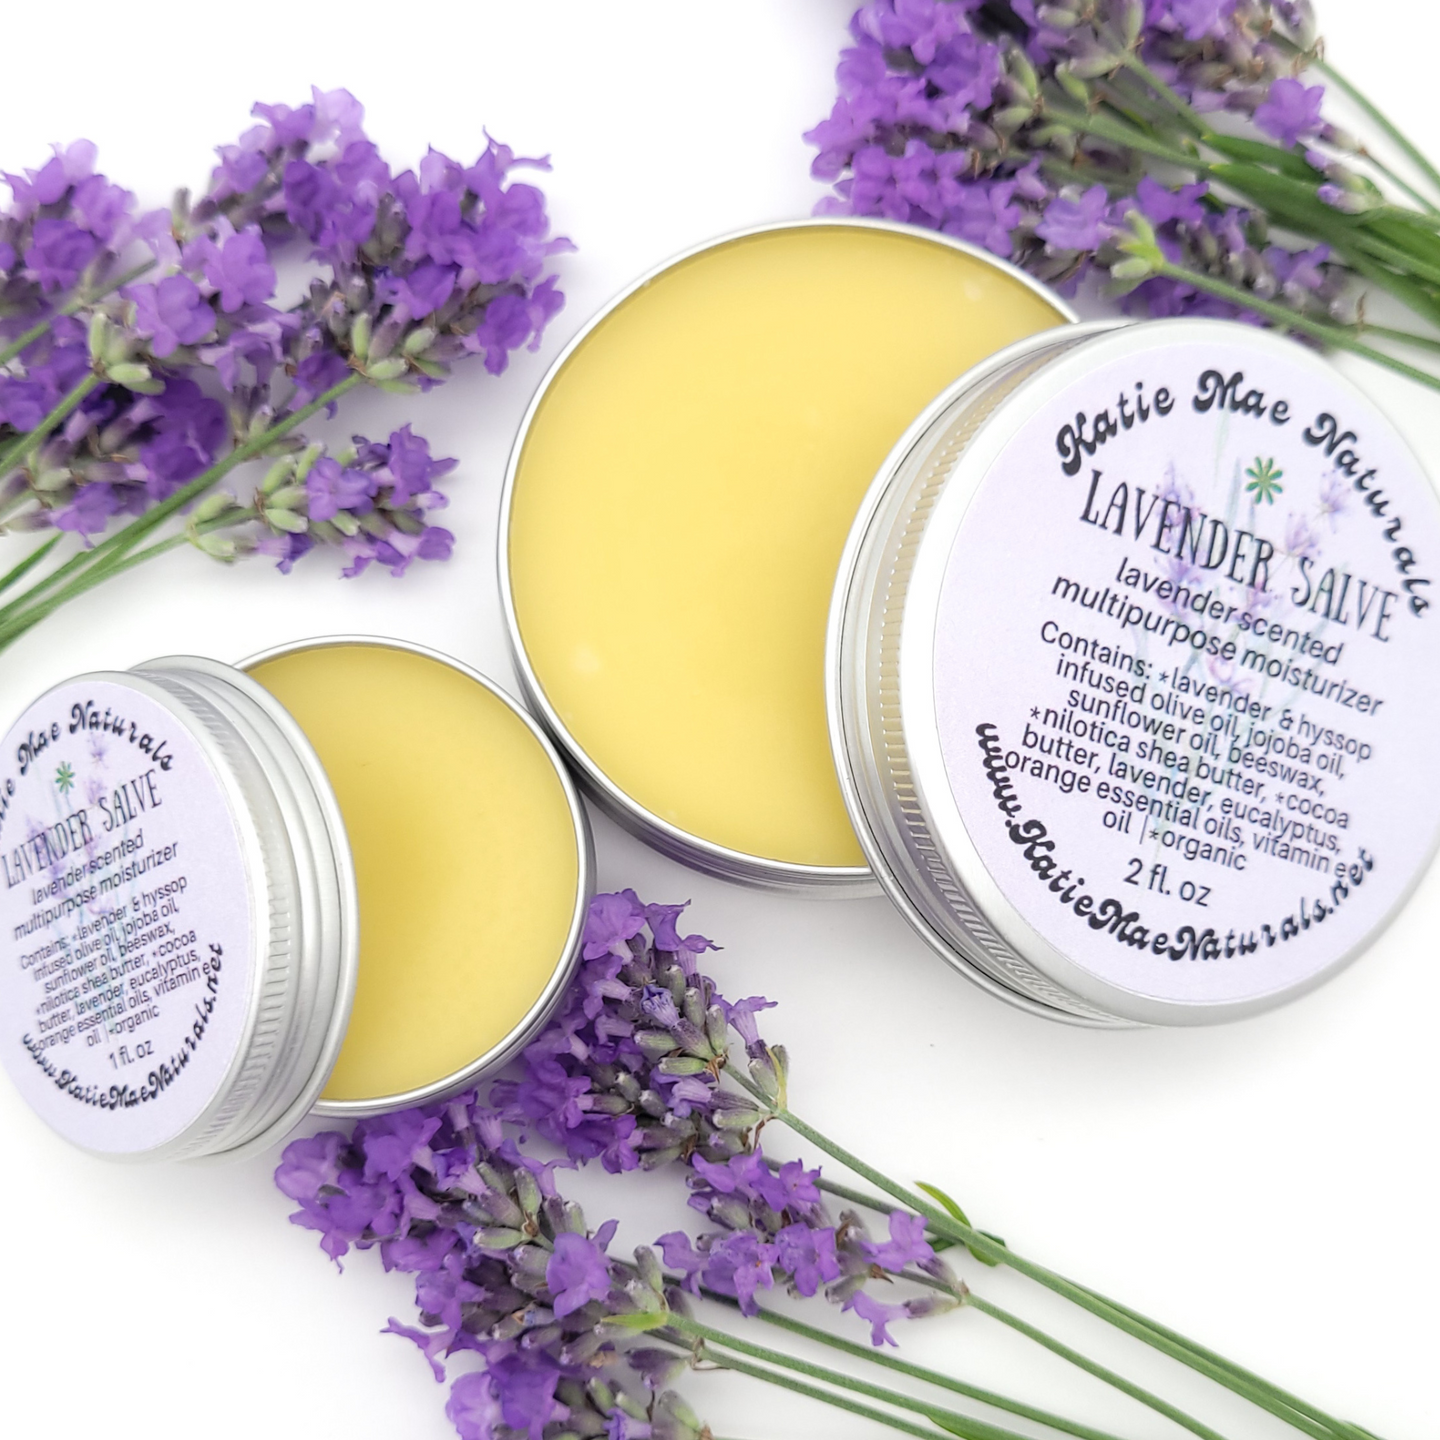 Lavender herbal salve